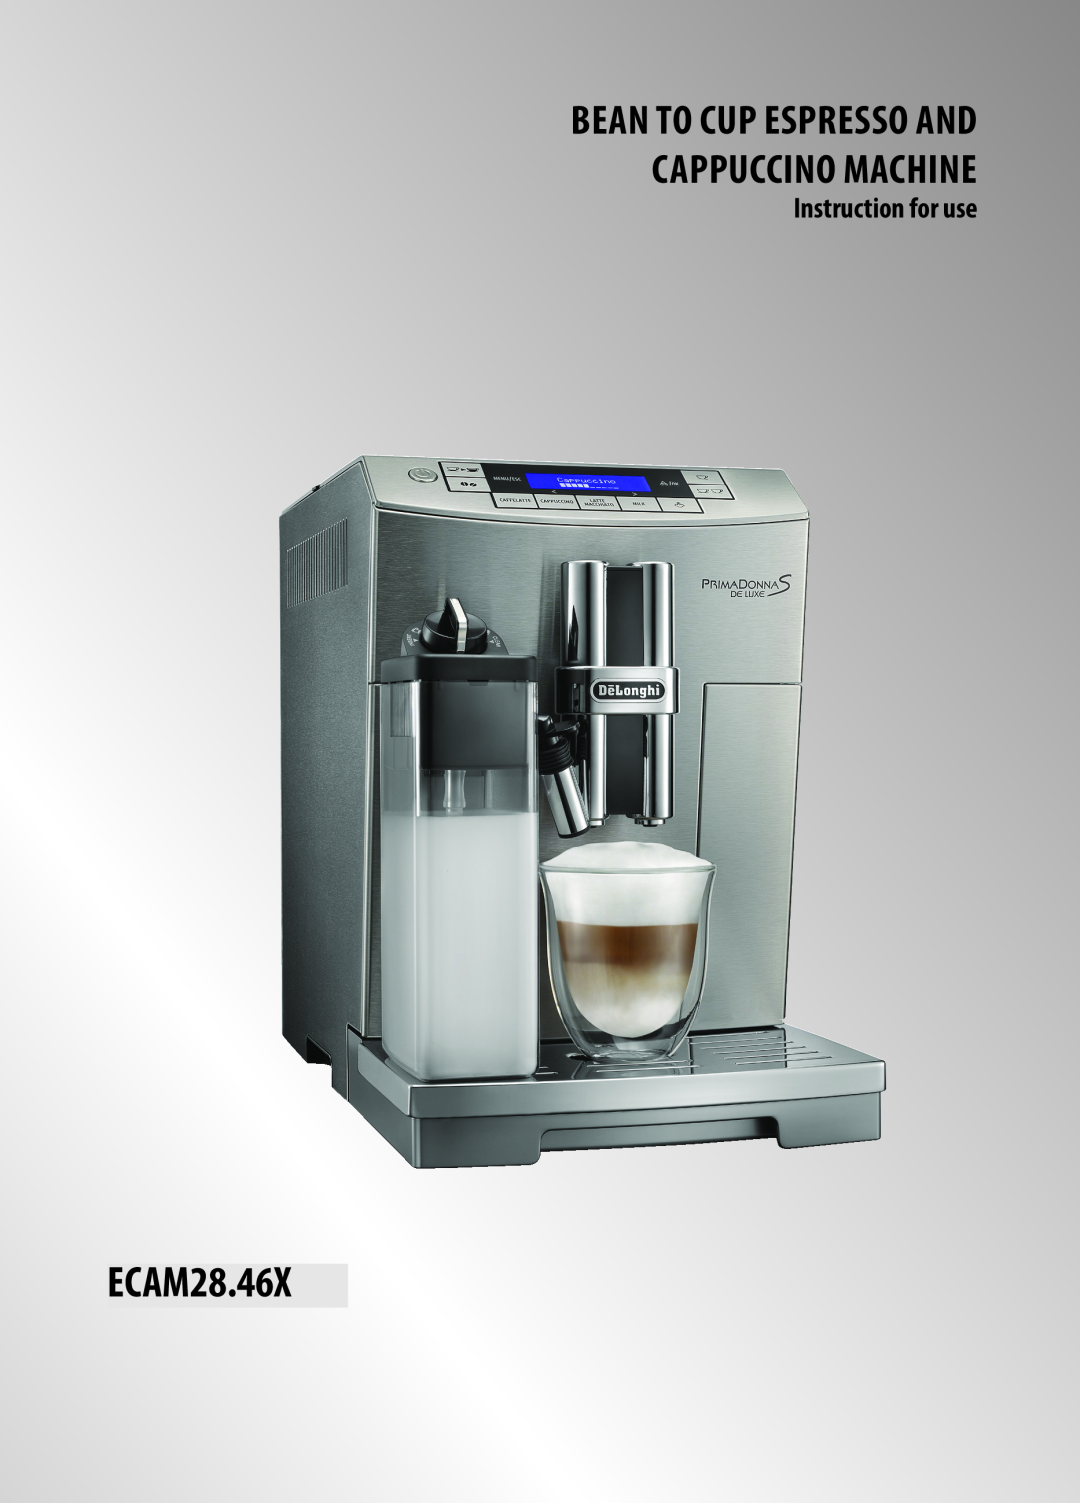 DeLonghi ECAM28.46X, GB, DE, 10.13 manual Bean To Cup Espresso And De Cappuccino Machine, Instruction for use 